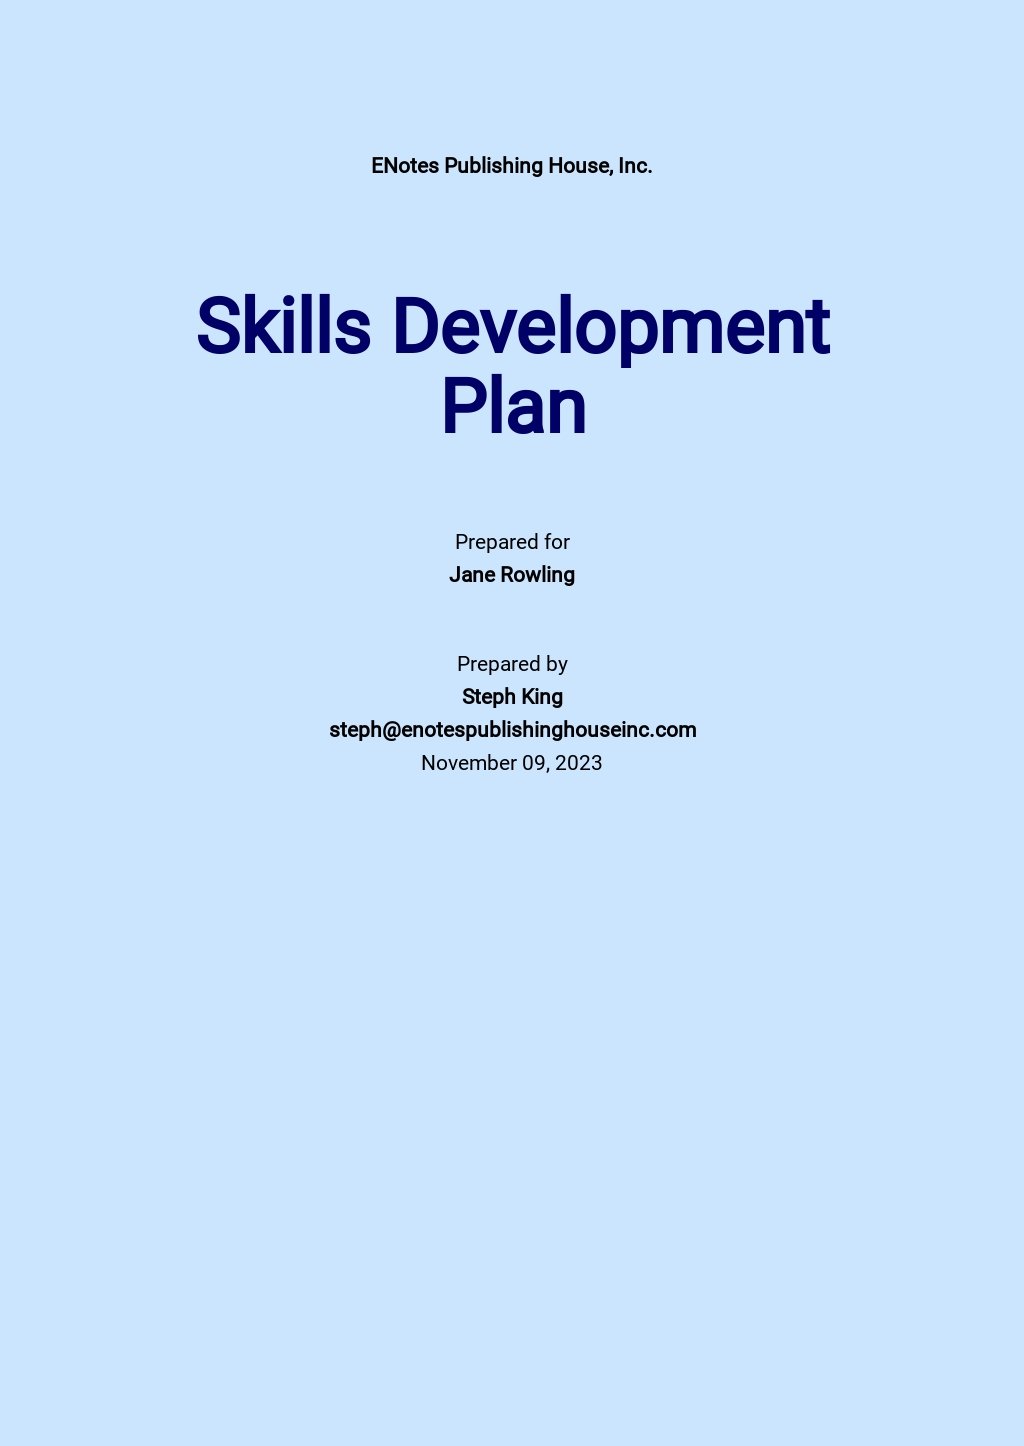 business plan for skill development